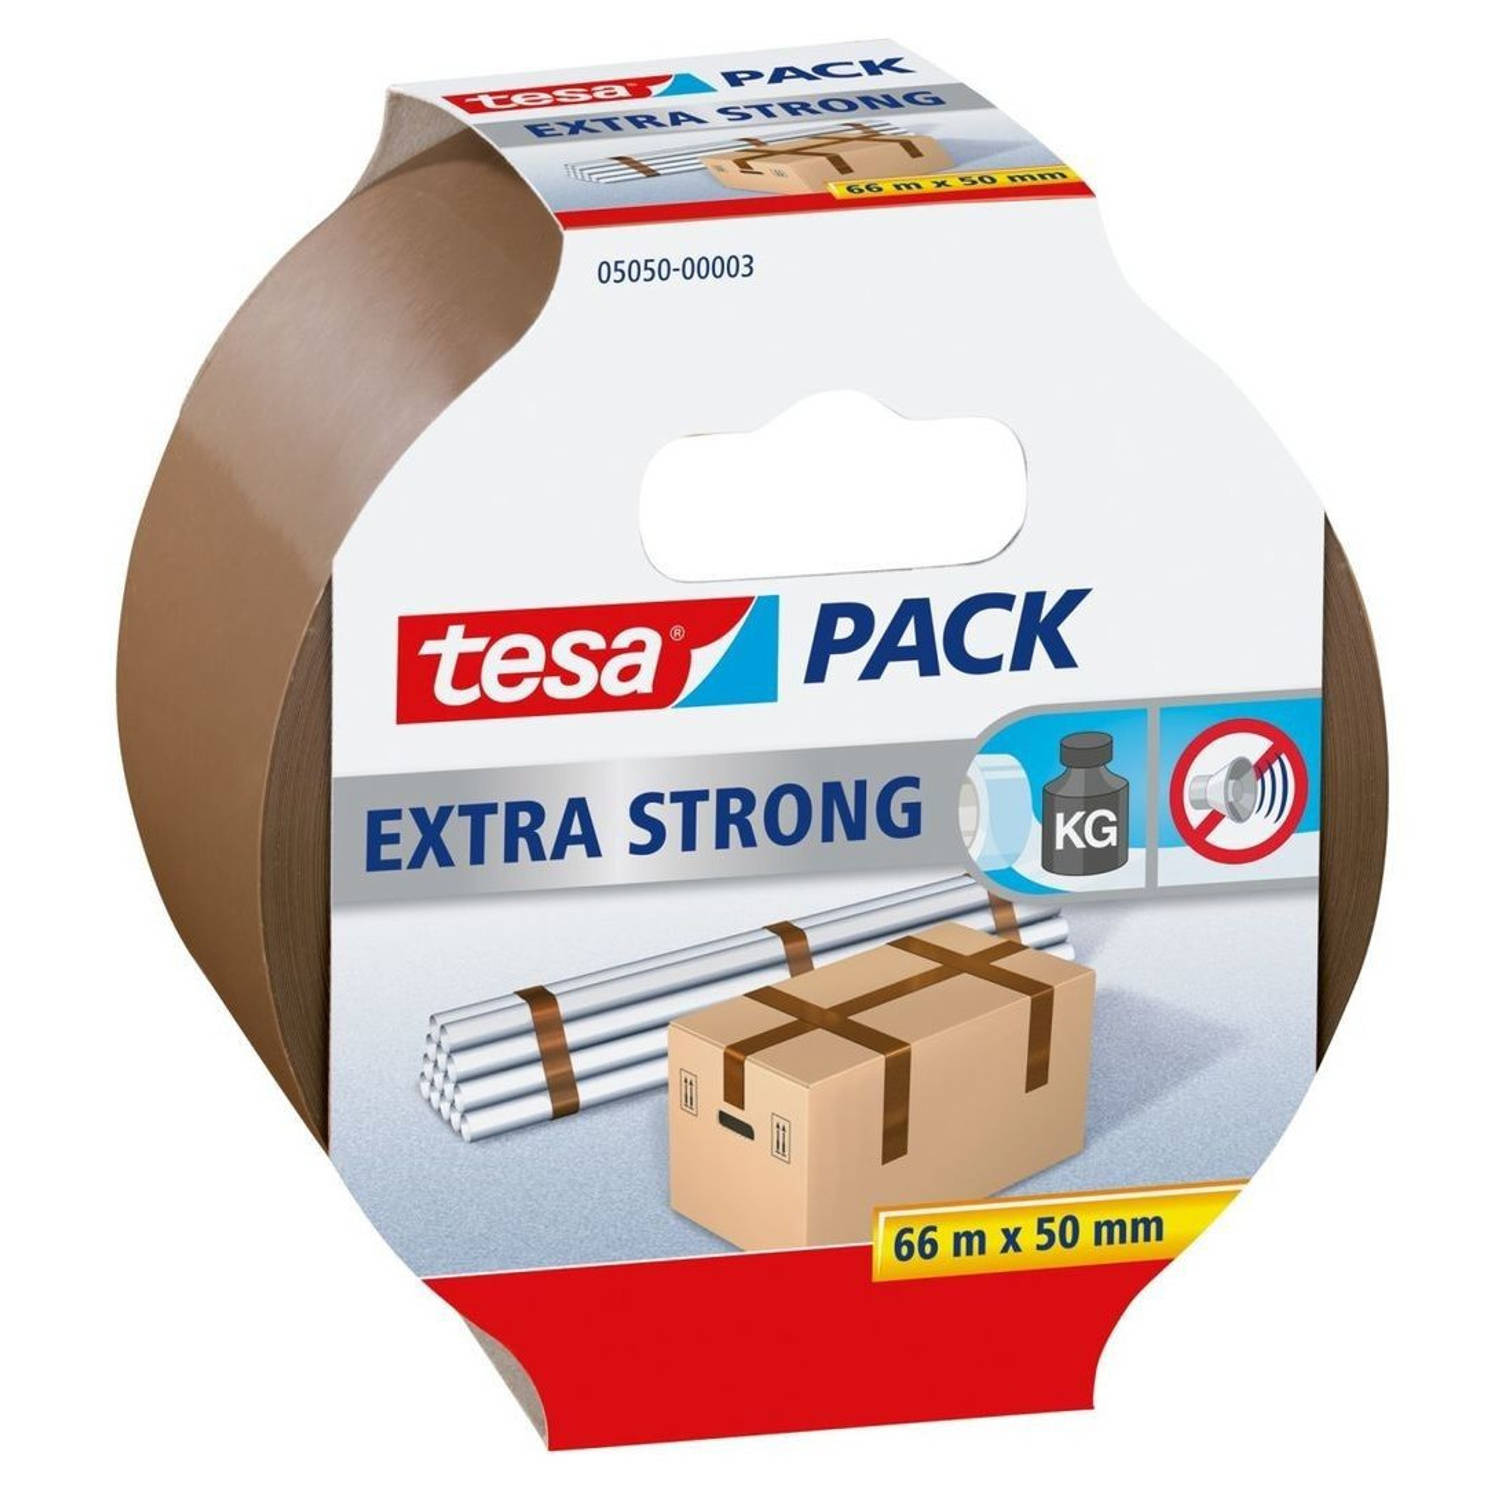 3x Tesa bruine verpakkingstape extra sterk 66 mtr x 50 mm - Tape (klussen)